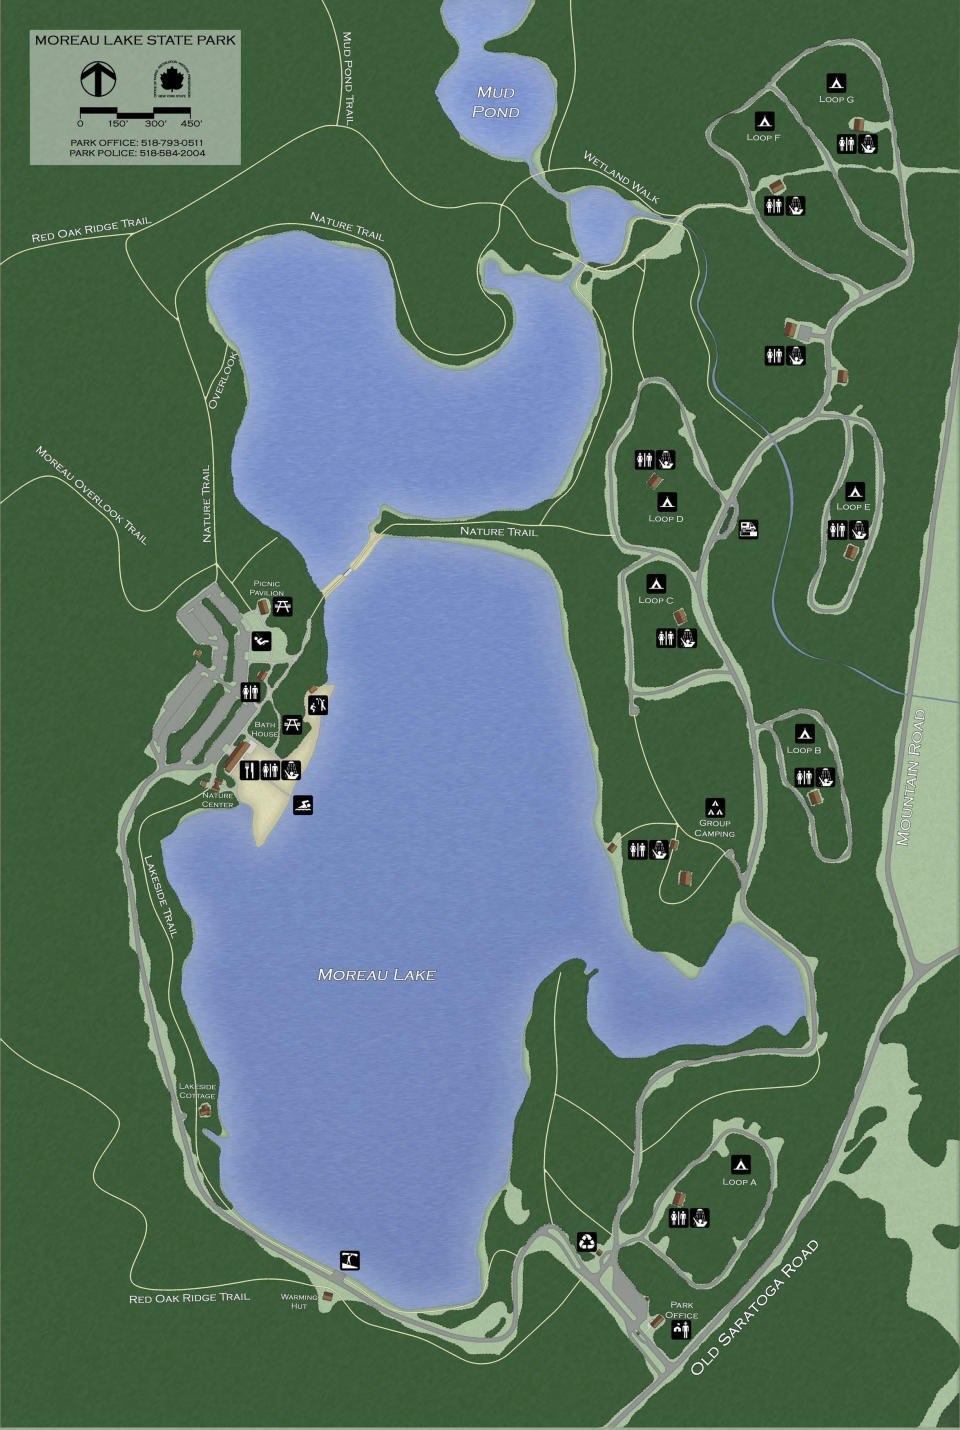 A map of Moreau Lake State Park / Credit: parks.ny.gov